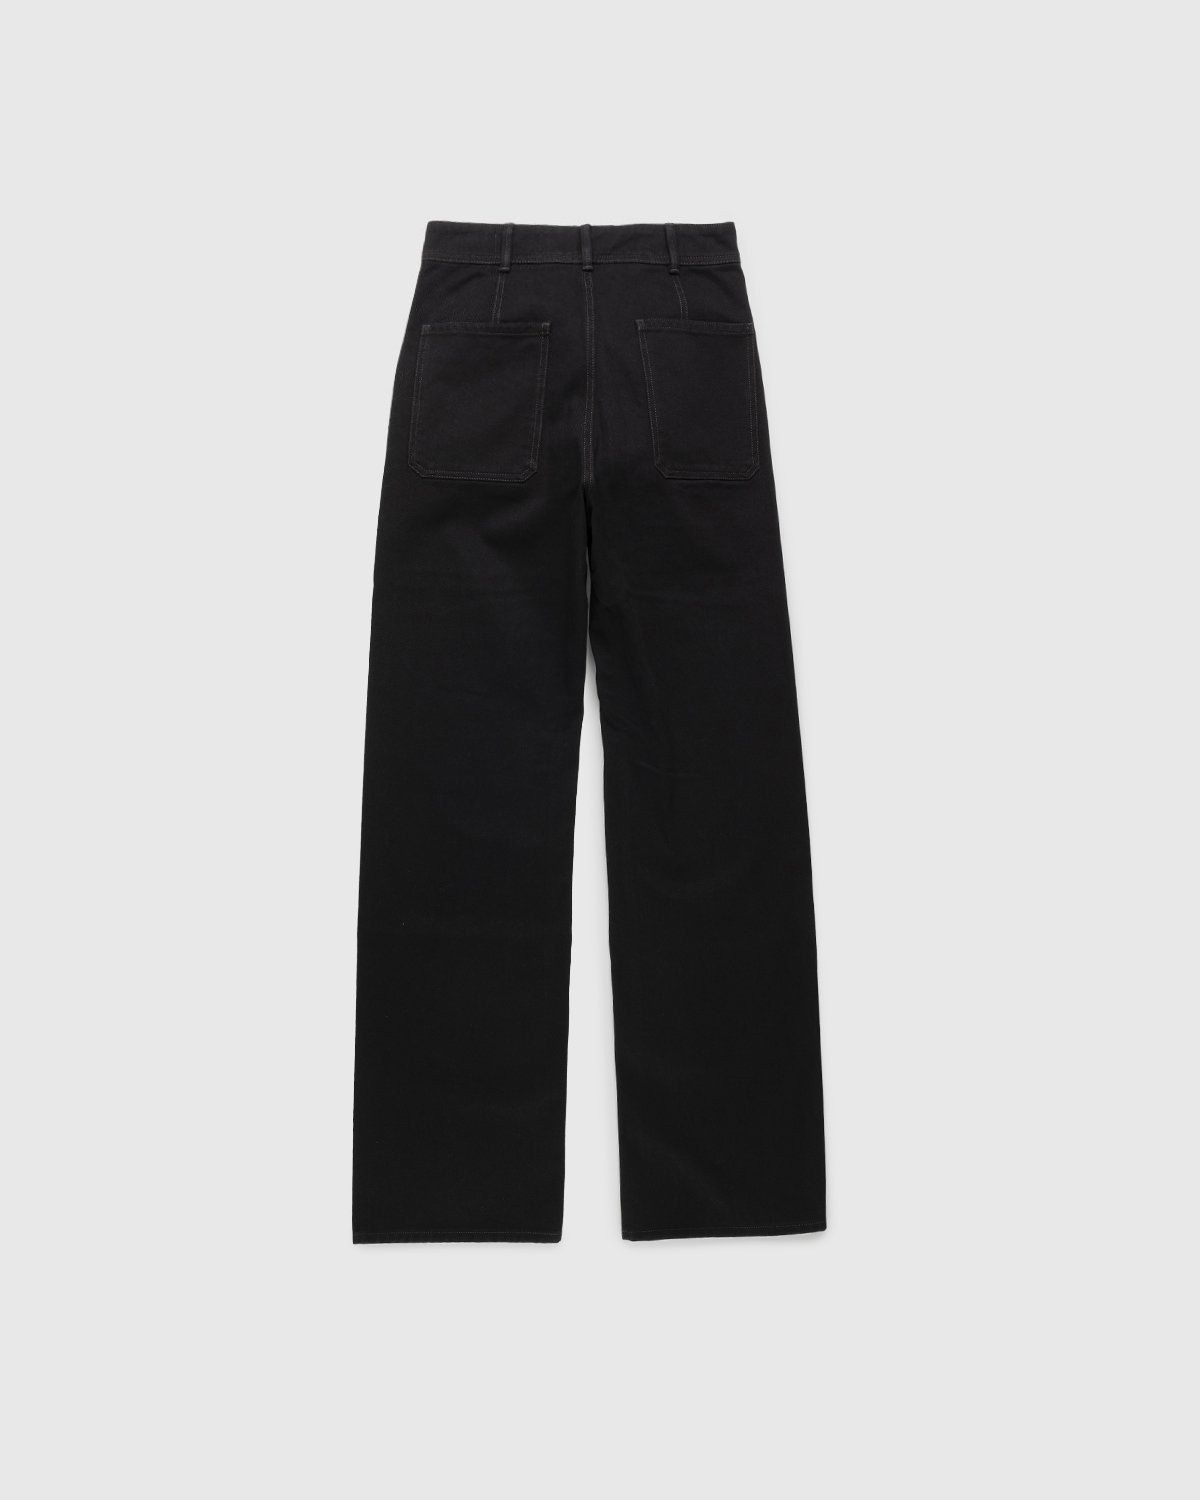 Lemaire – Rinsed Denim Sailor Pants Black - Pants - Black - Image 2